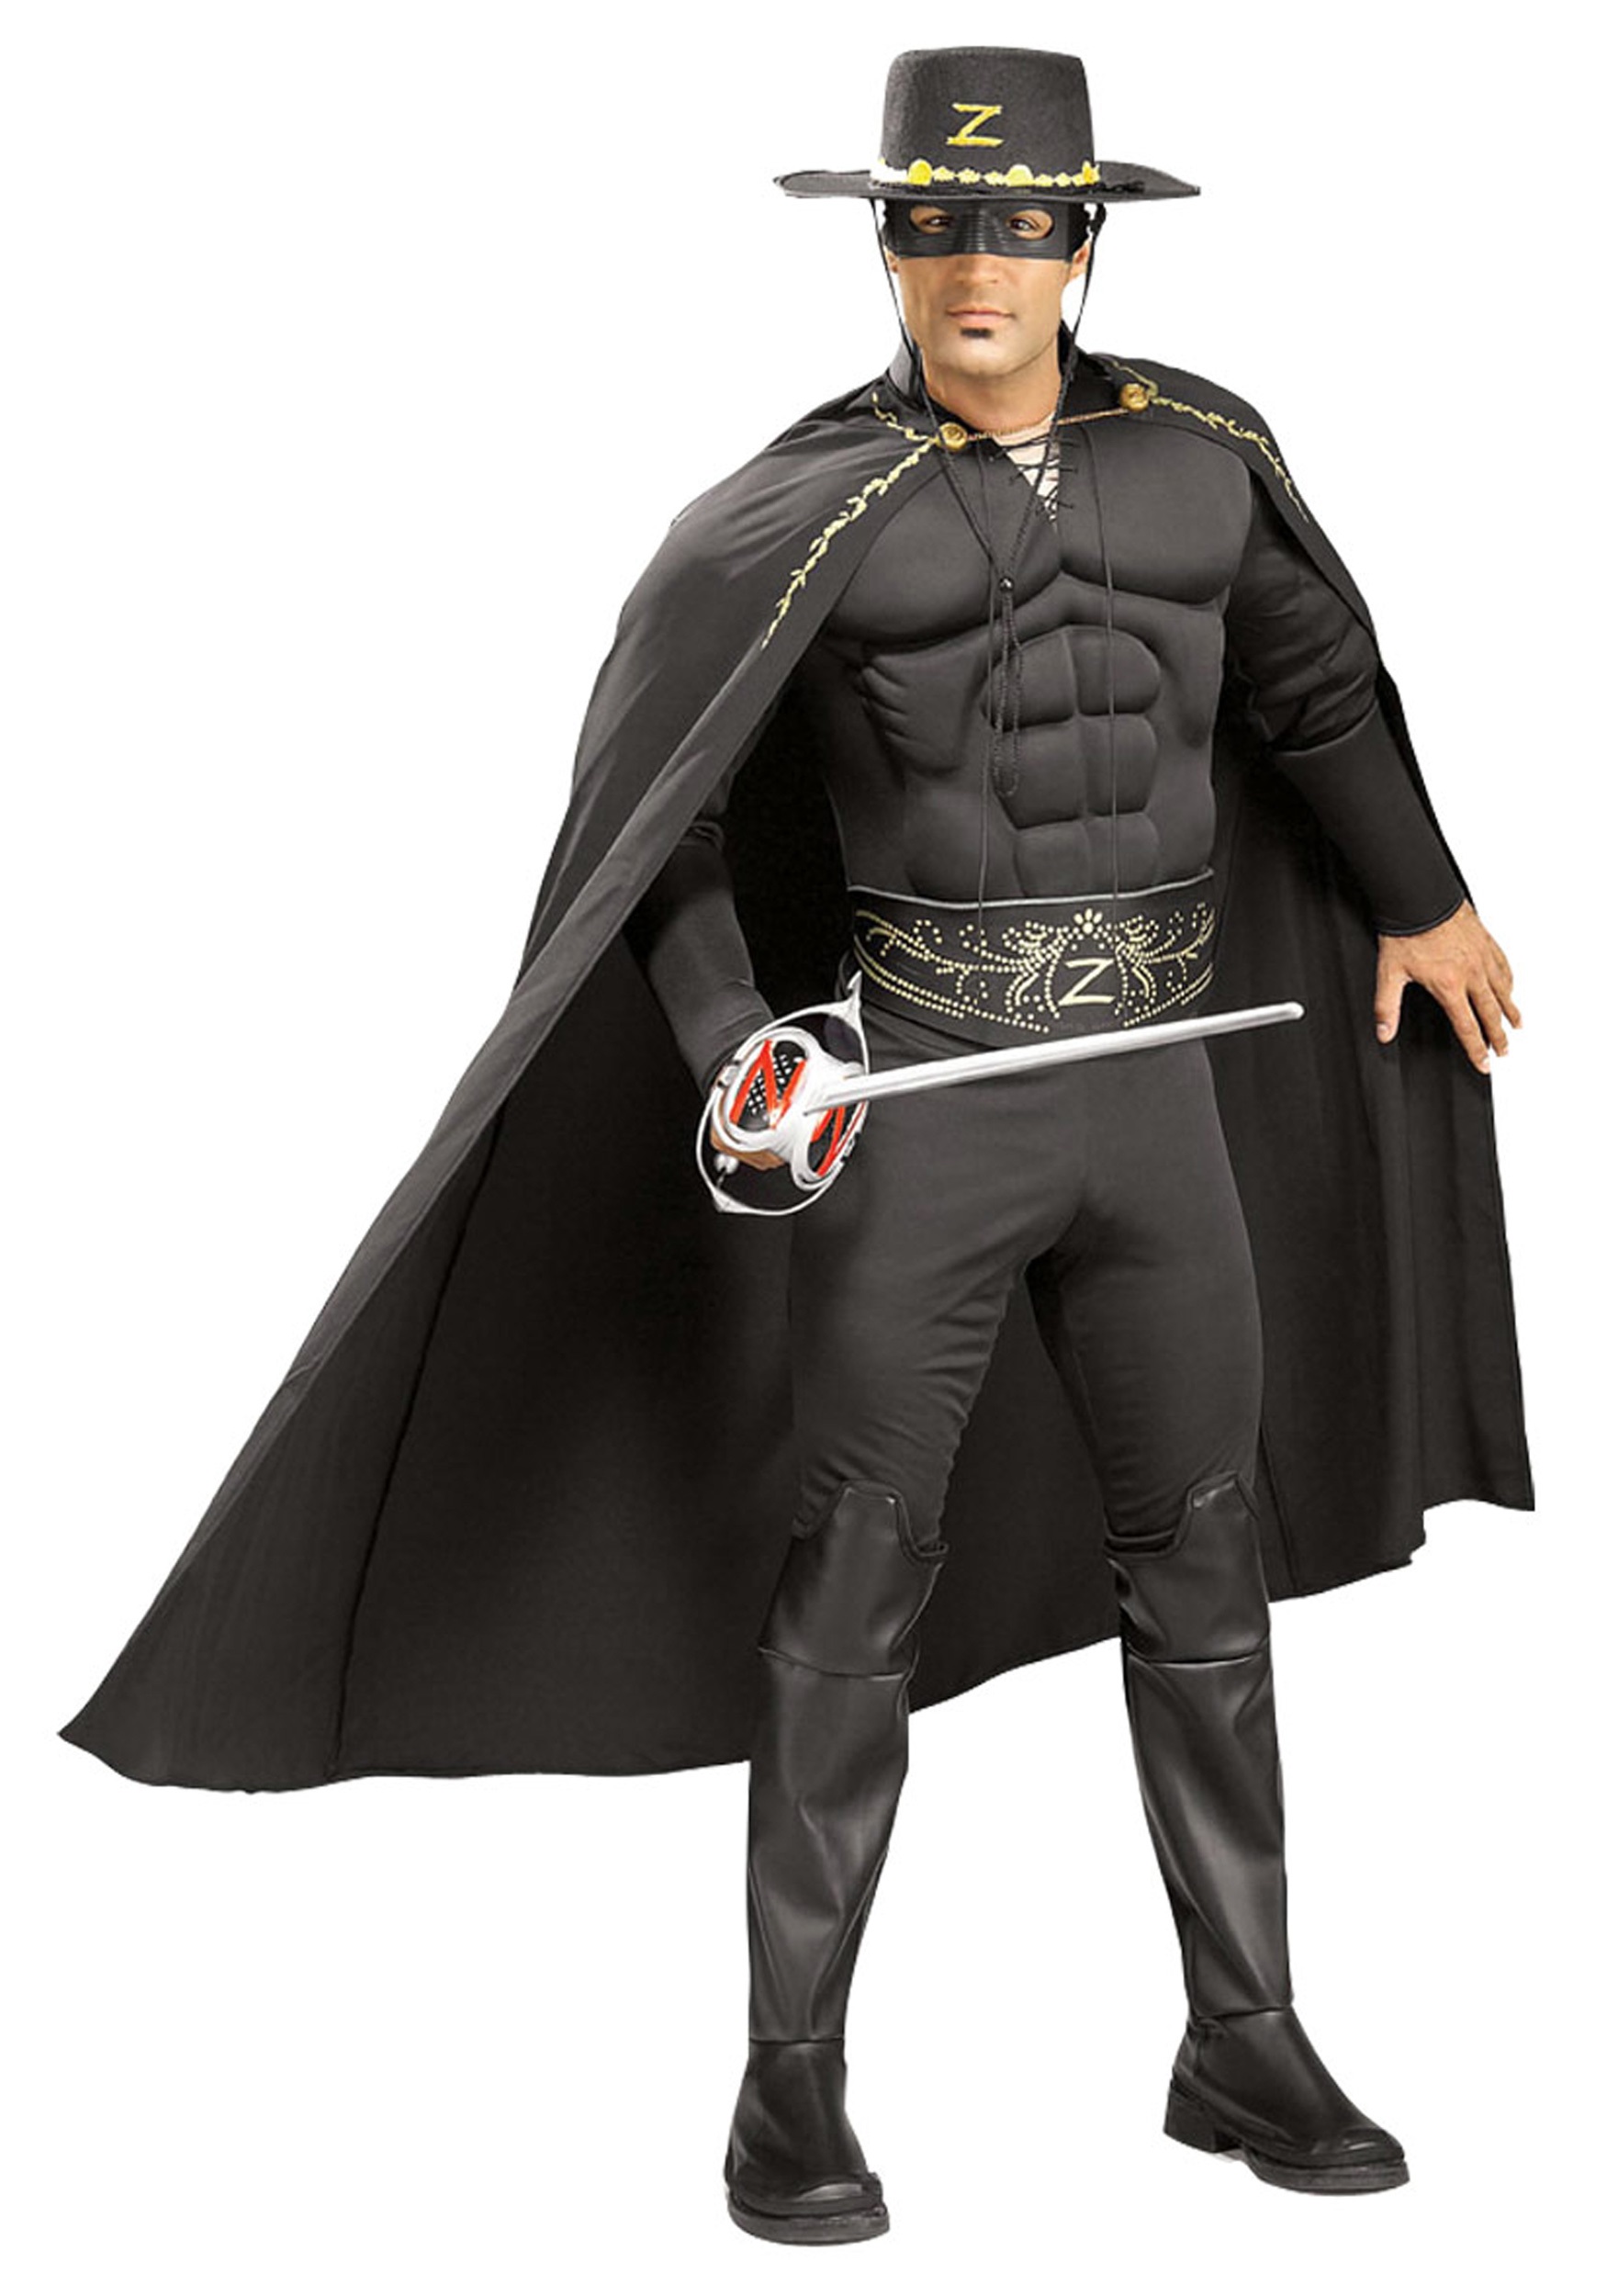 Permanecer de pié alojamiento Expectativa Adult Zorro Costume - Mask of Zorro Halloween Costumes